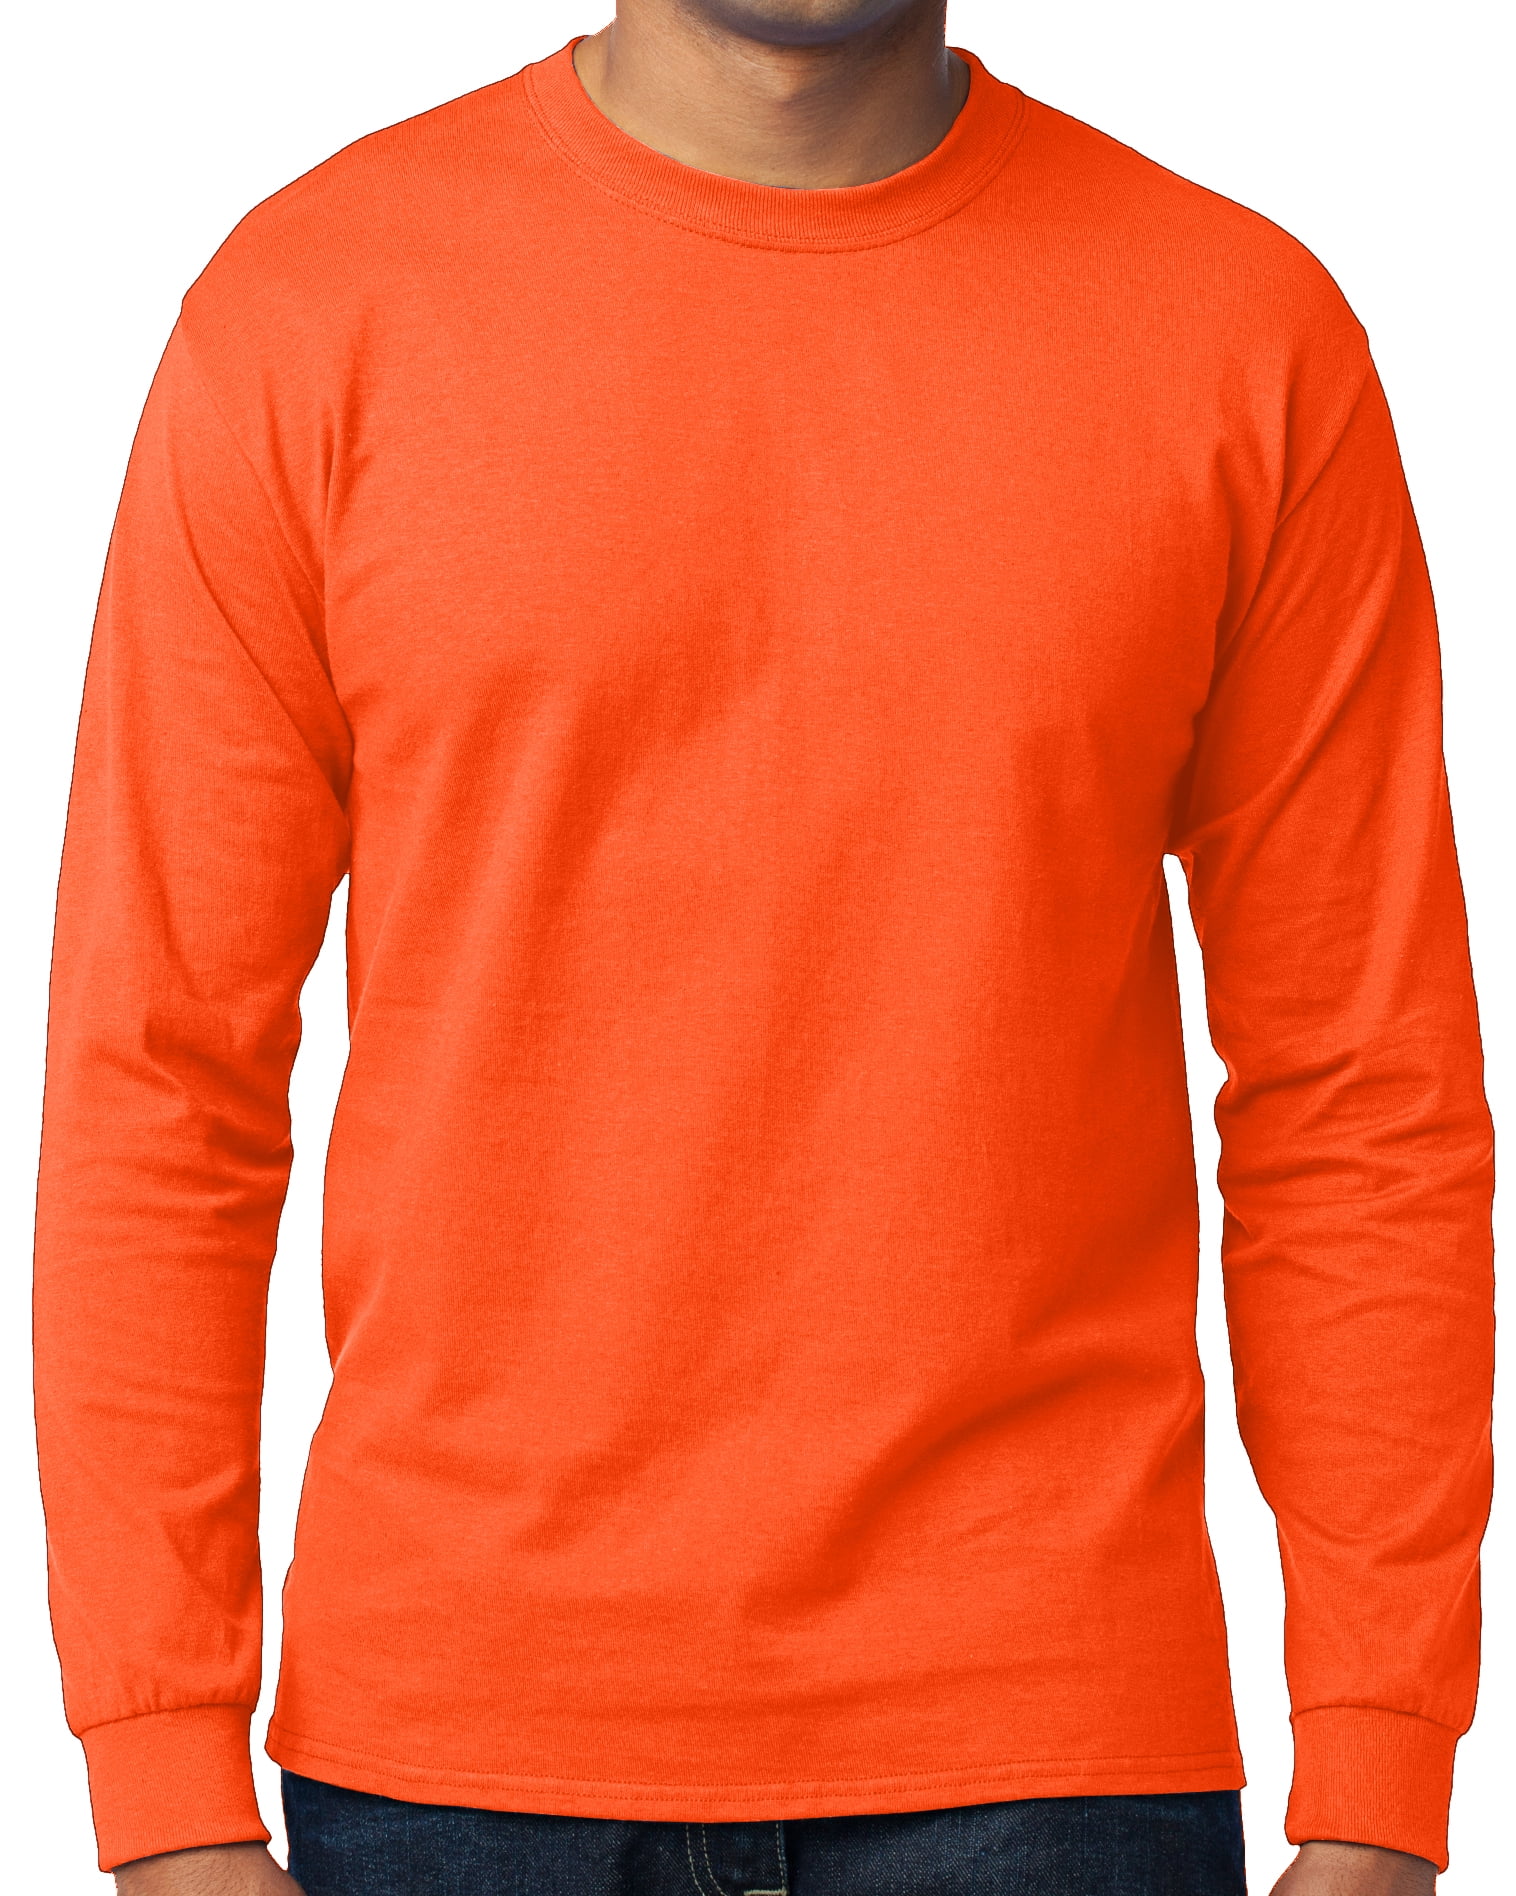 neon orange t shirt